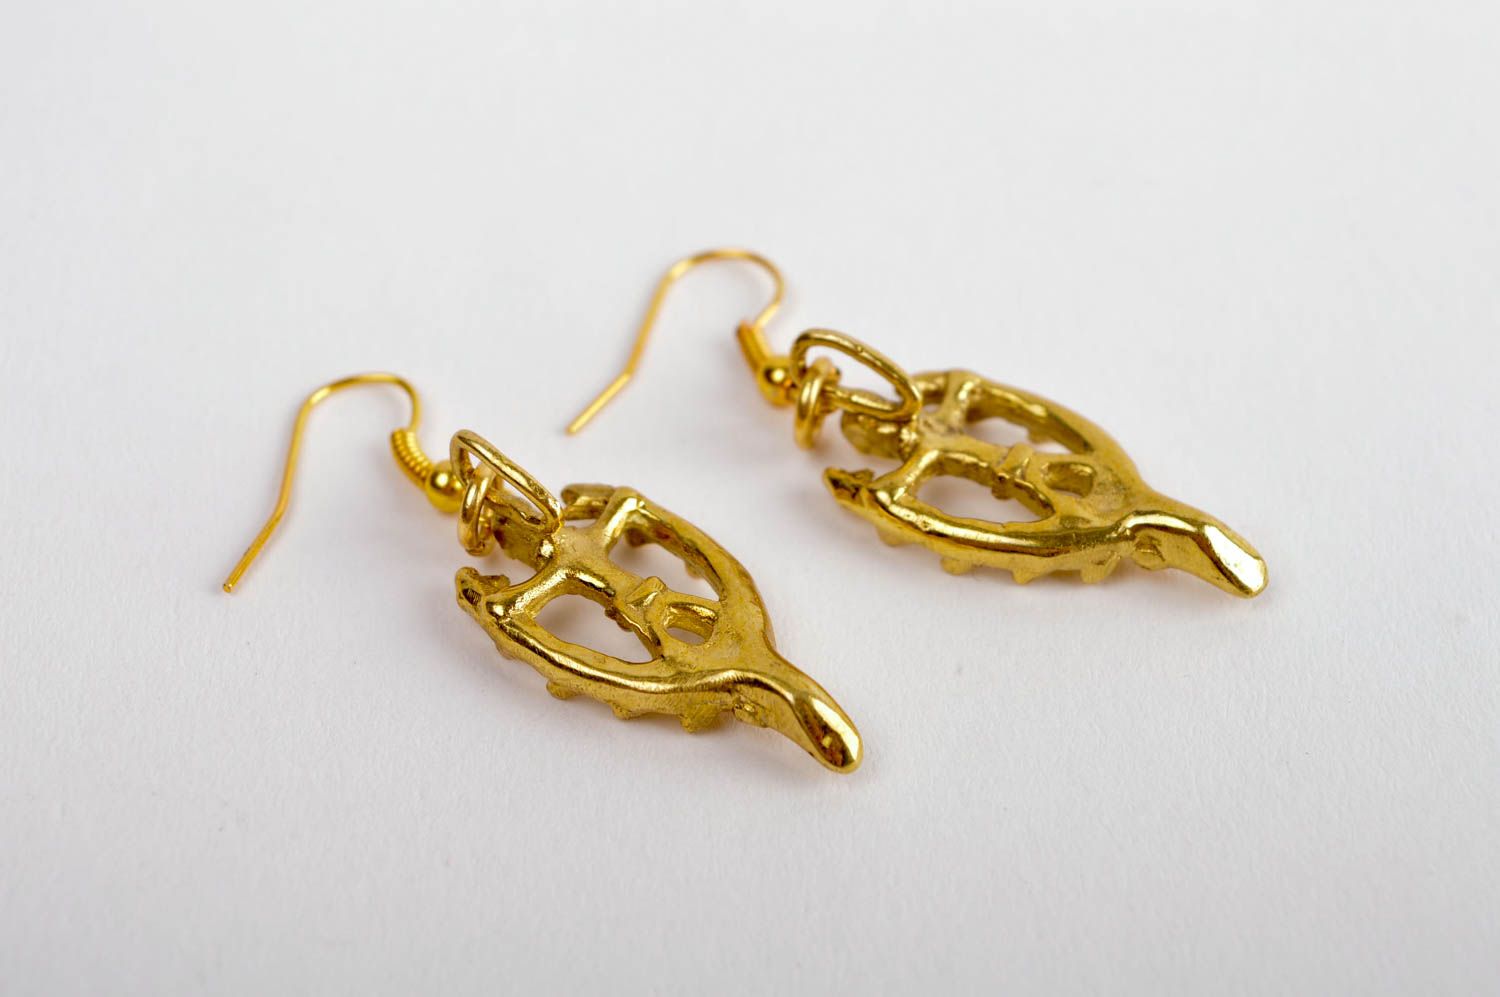 Long earrings fashion accessories designer jewelry handmade earrings gift ideas photo 4